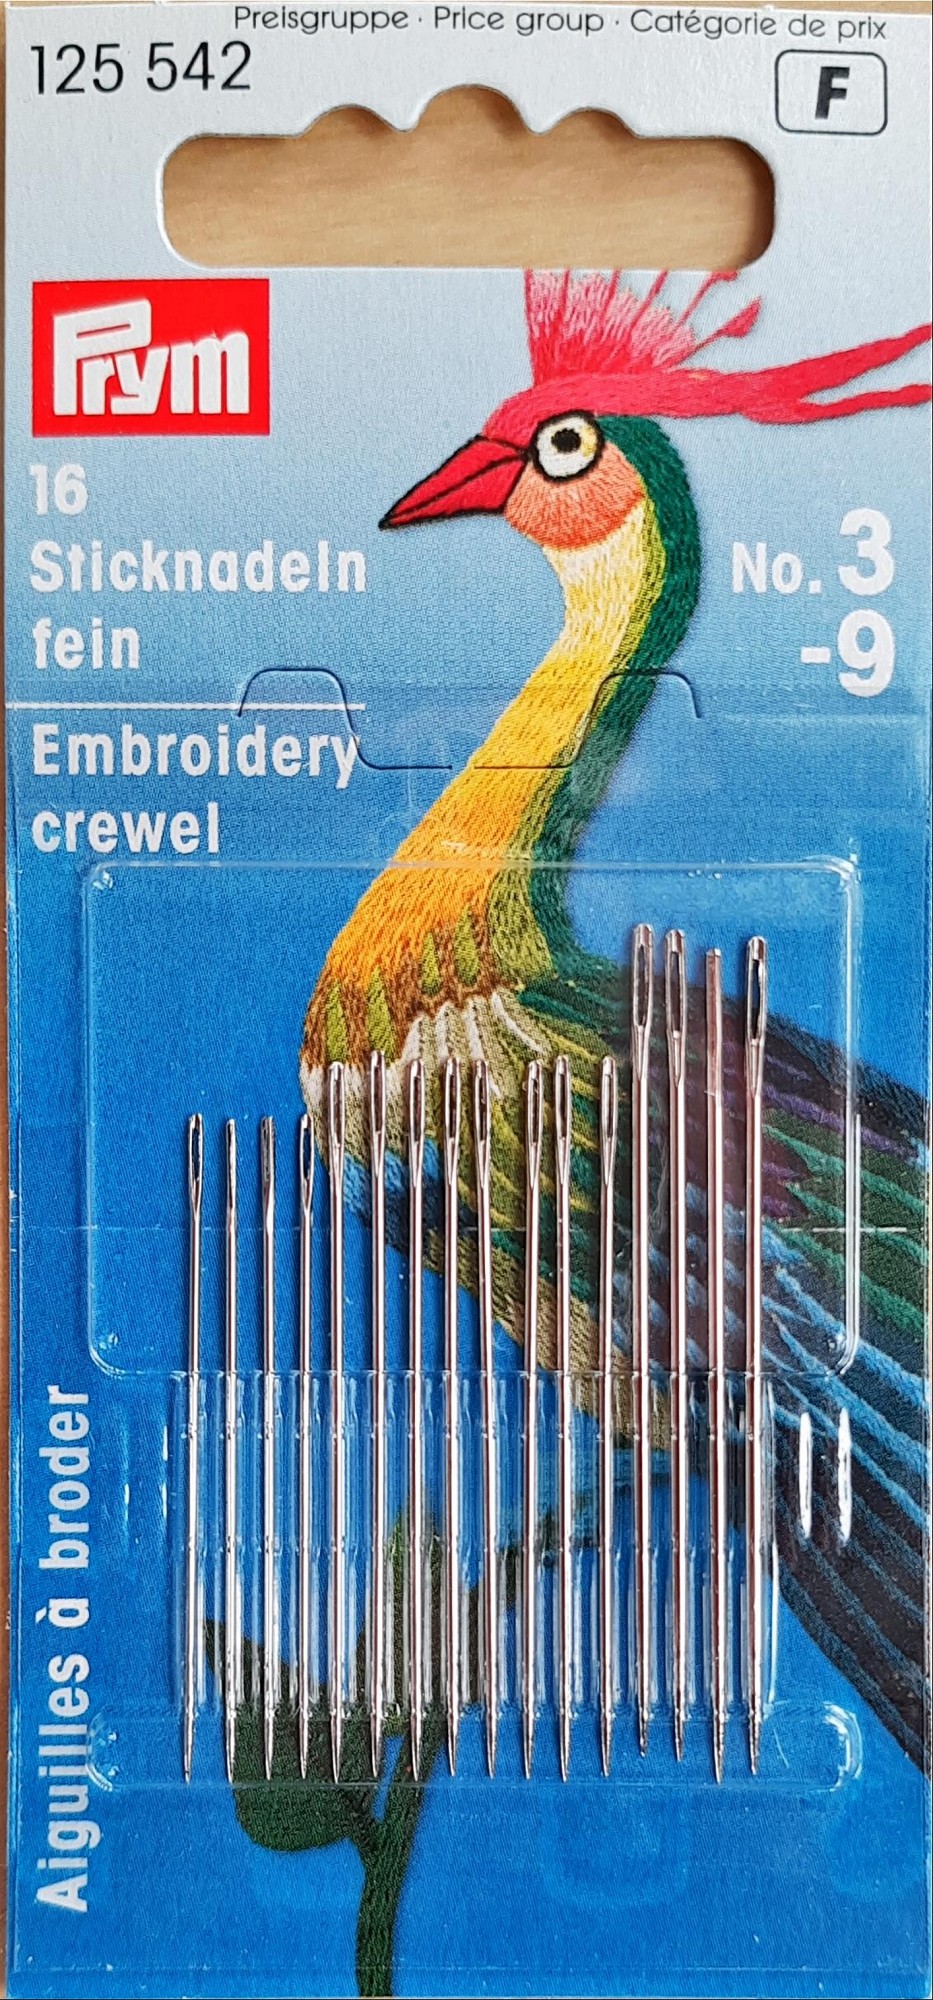 Crewelnadeln ST 3-9 silberfarbig/goldfarbig